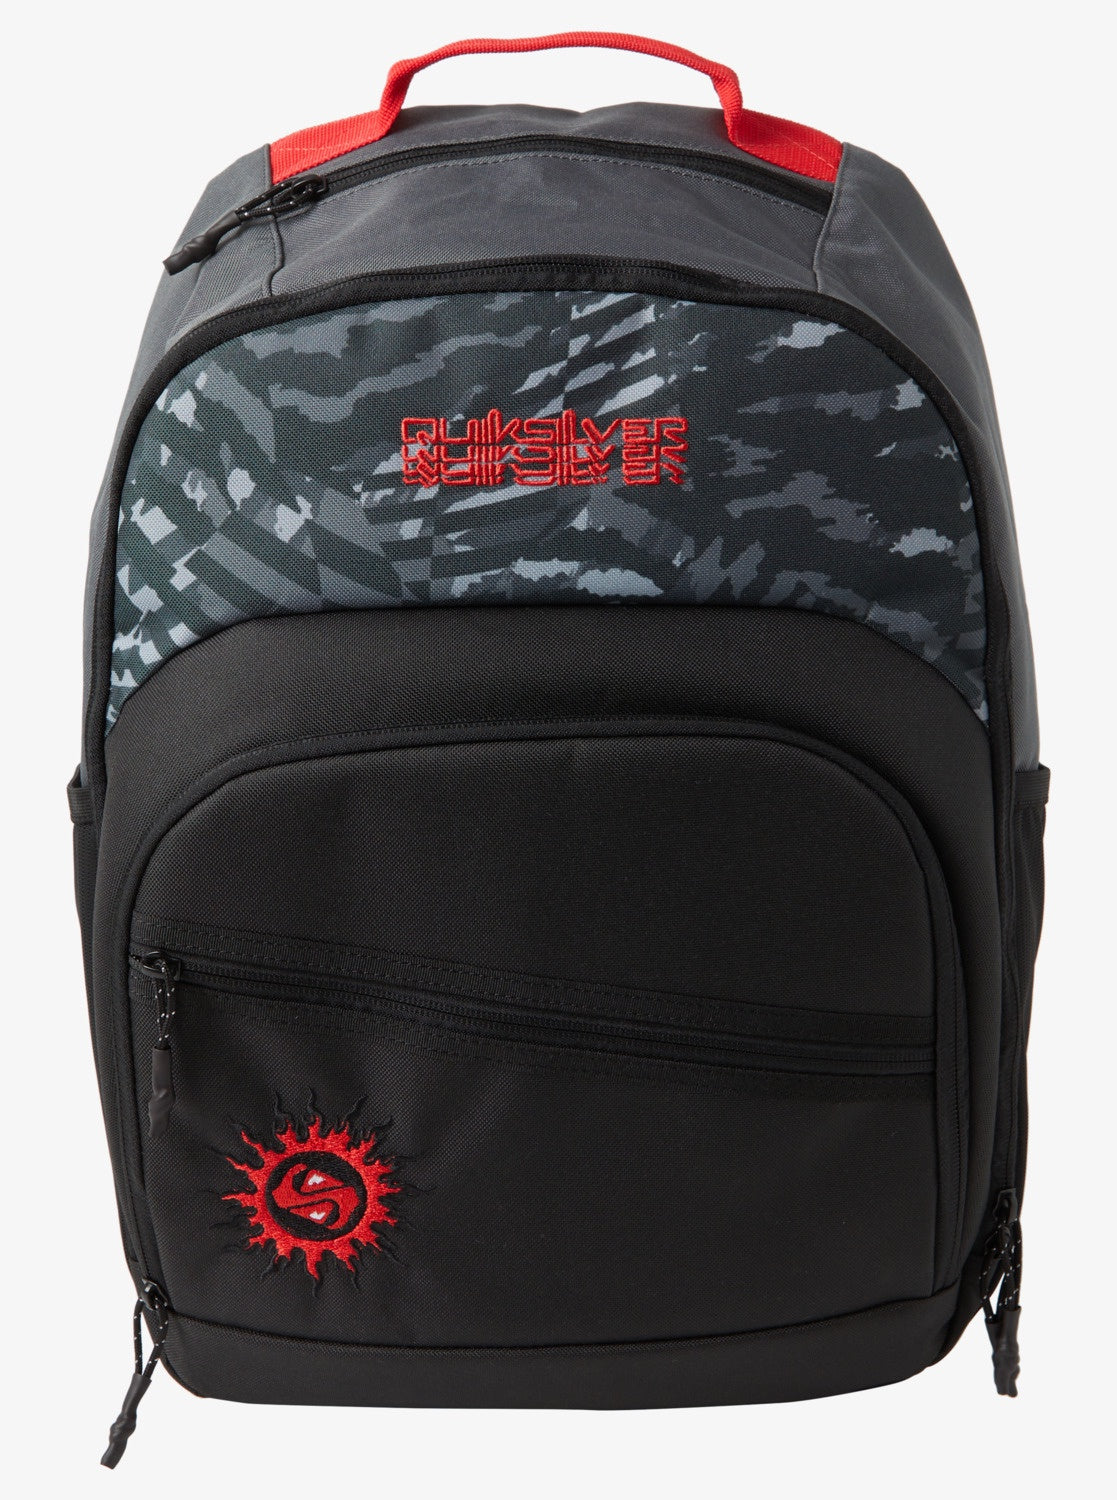 Mens Schoolie Cooler 2.0 Insulated Cooler Backpack